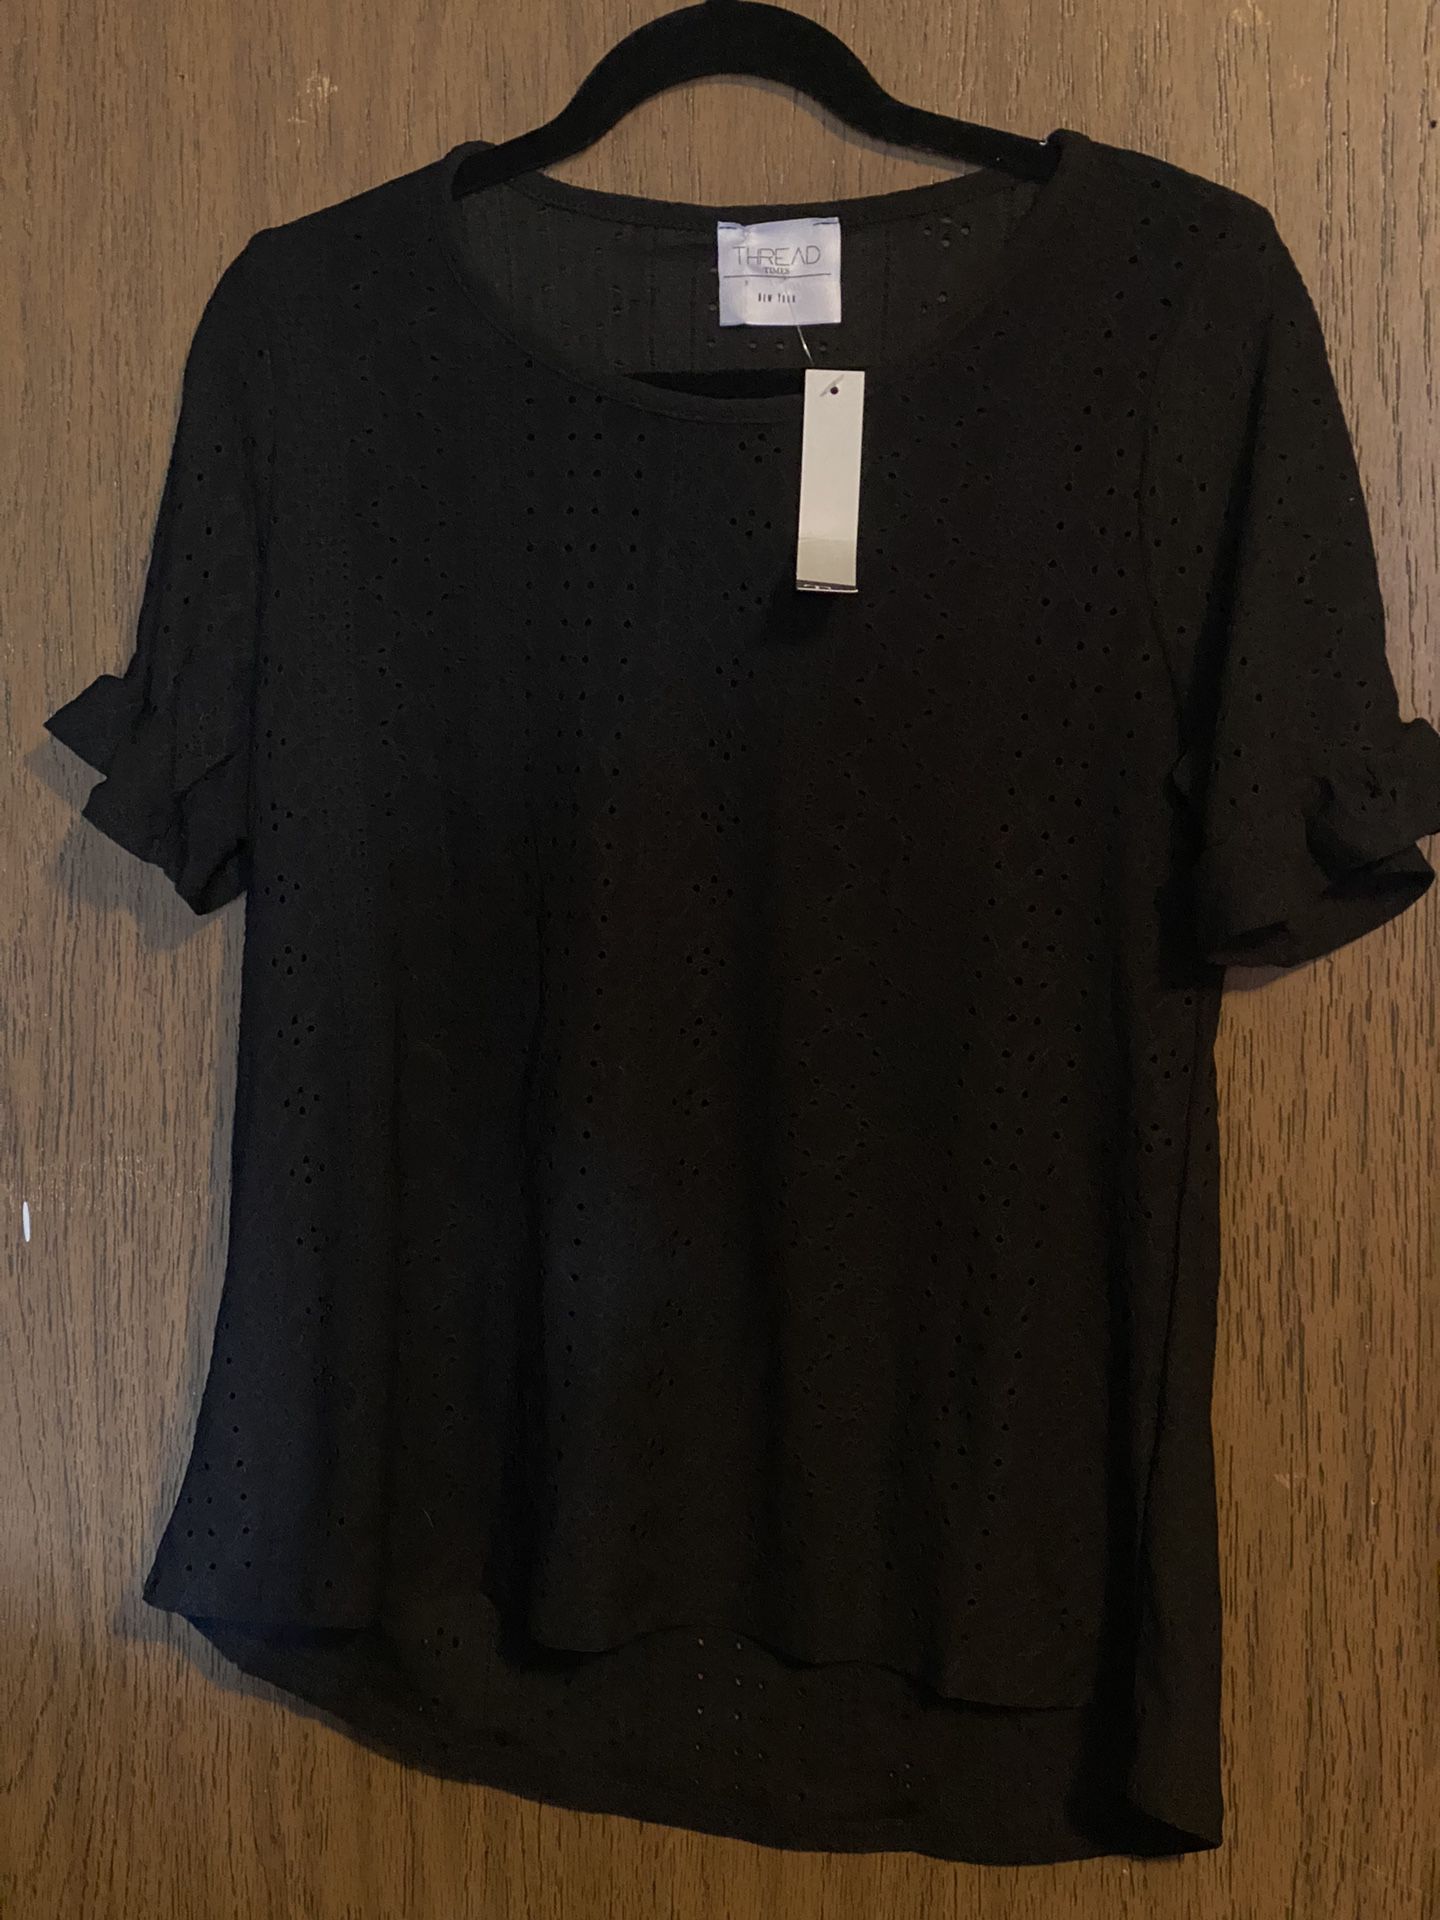 Size Medium Black Shirt